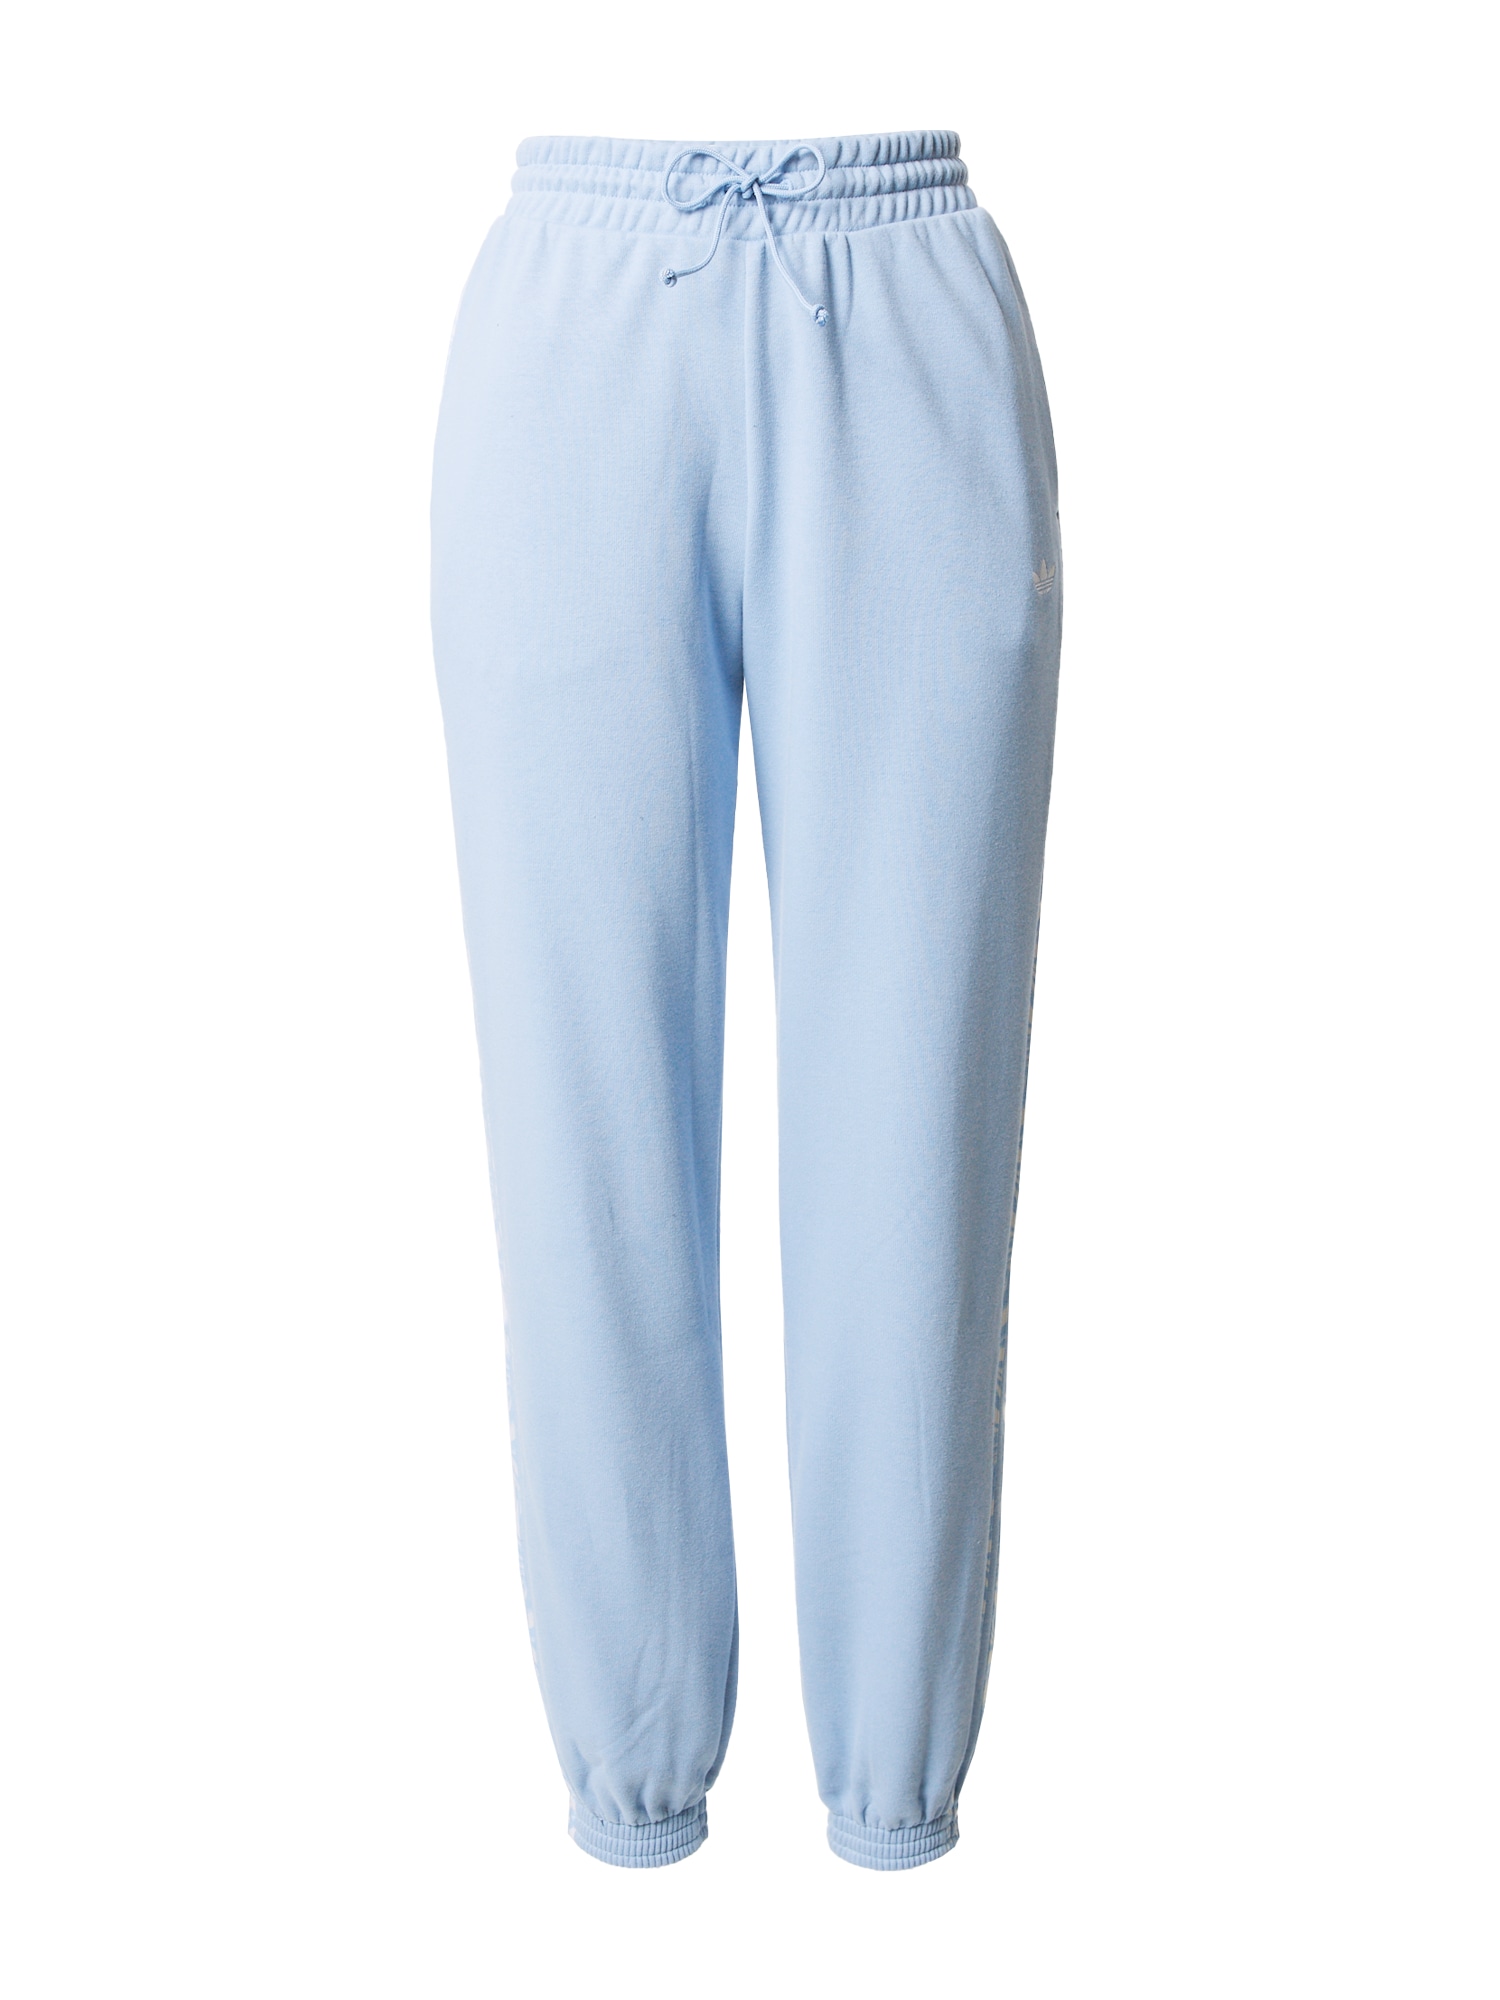 ADIDAS ORIGINALS Športne hlače  svetlo modra / bela